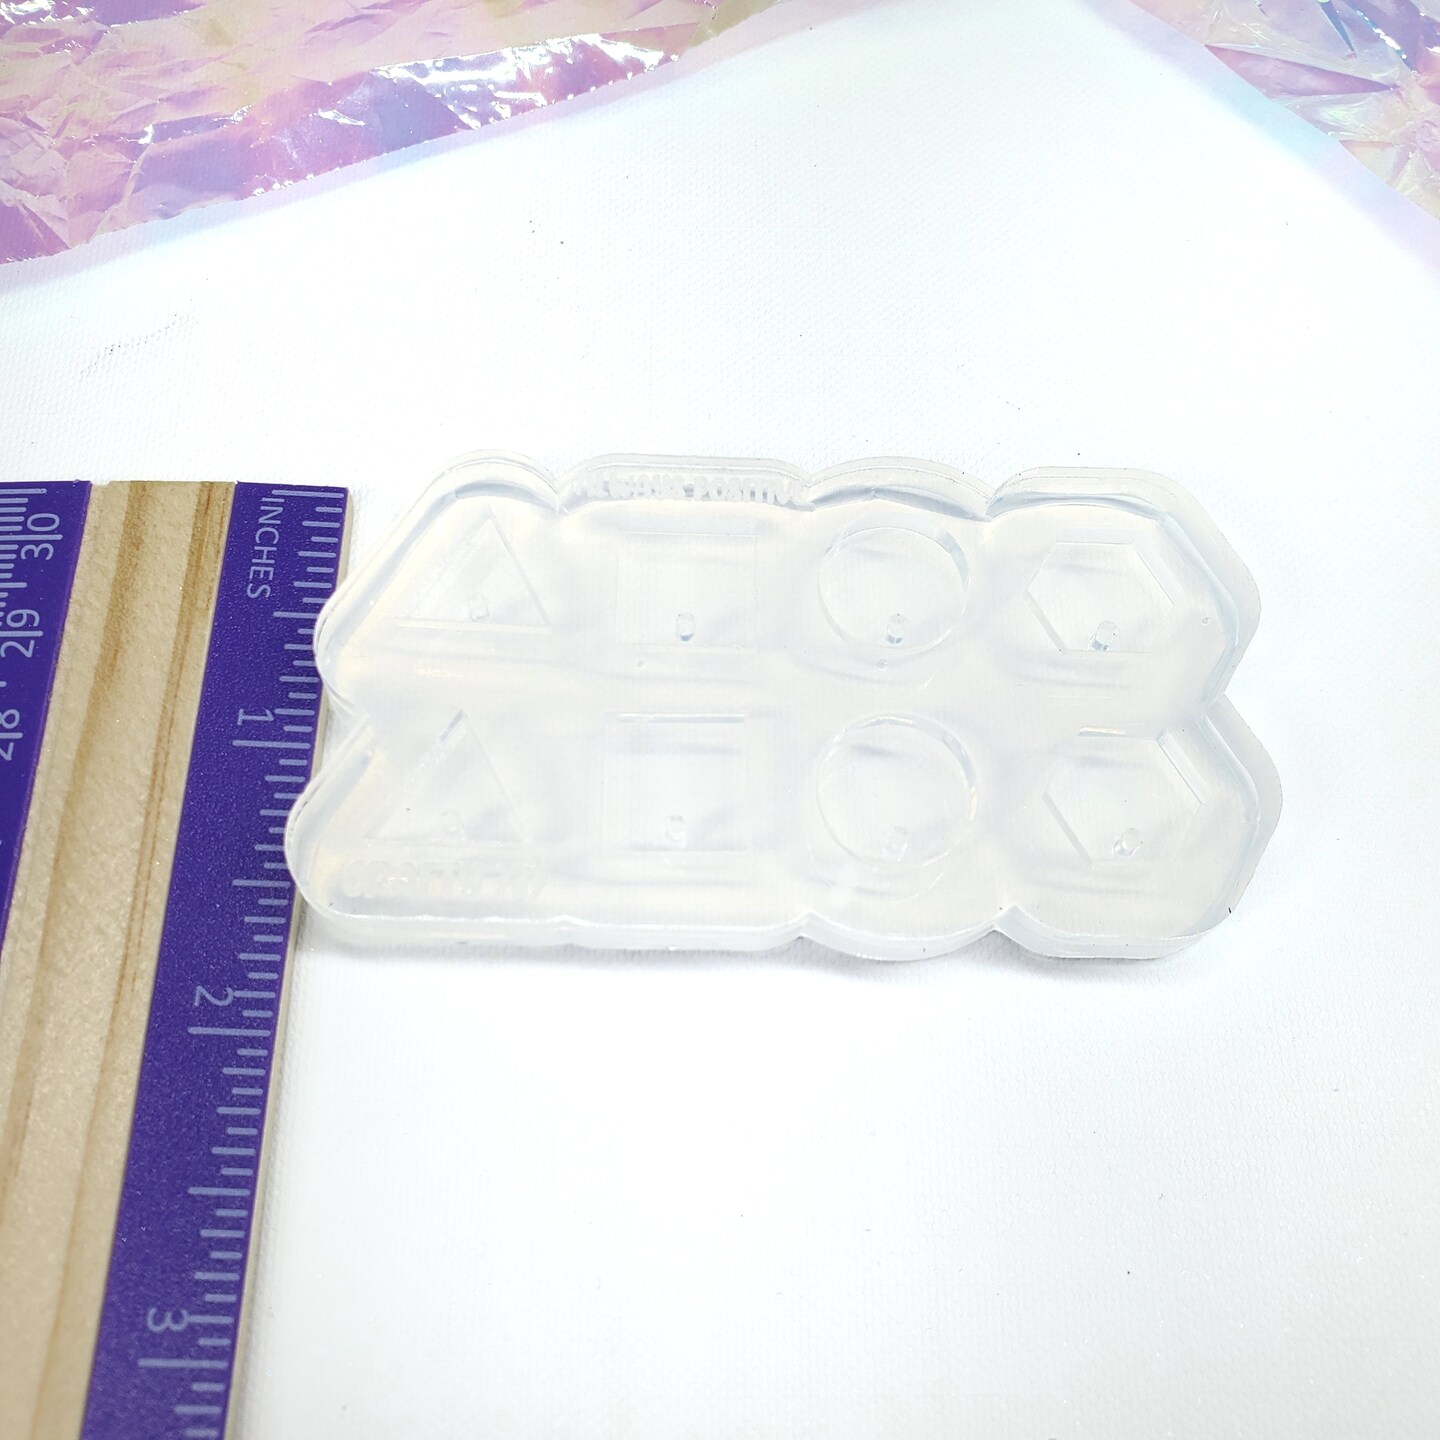 Pixiss Silicone Mold Making Kit Liquid Silicone Rubber 200g/7fl oz